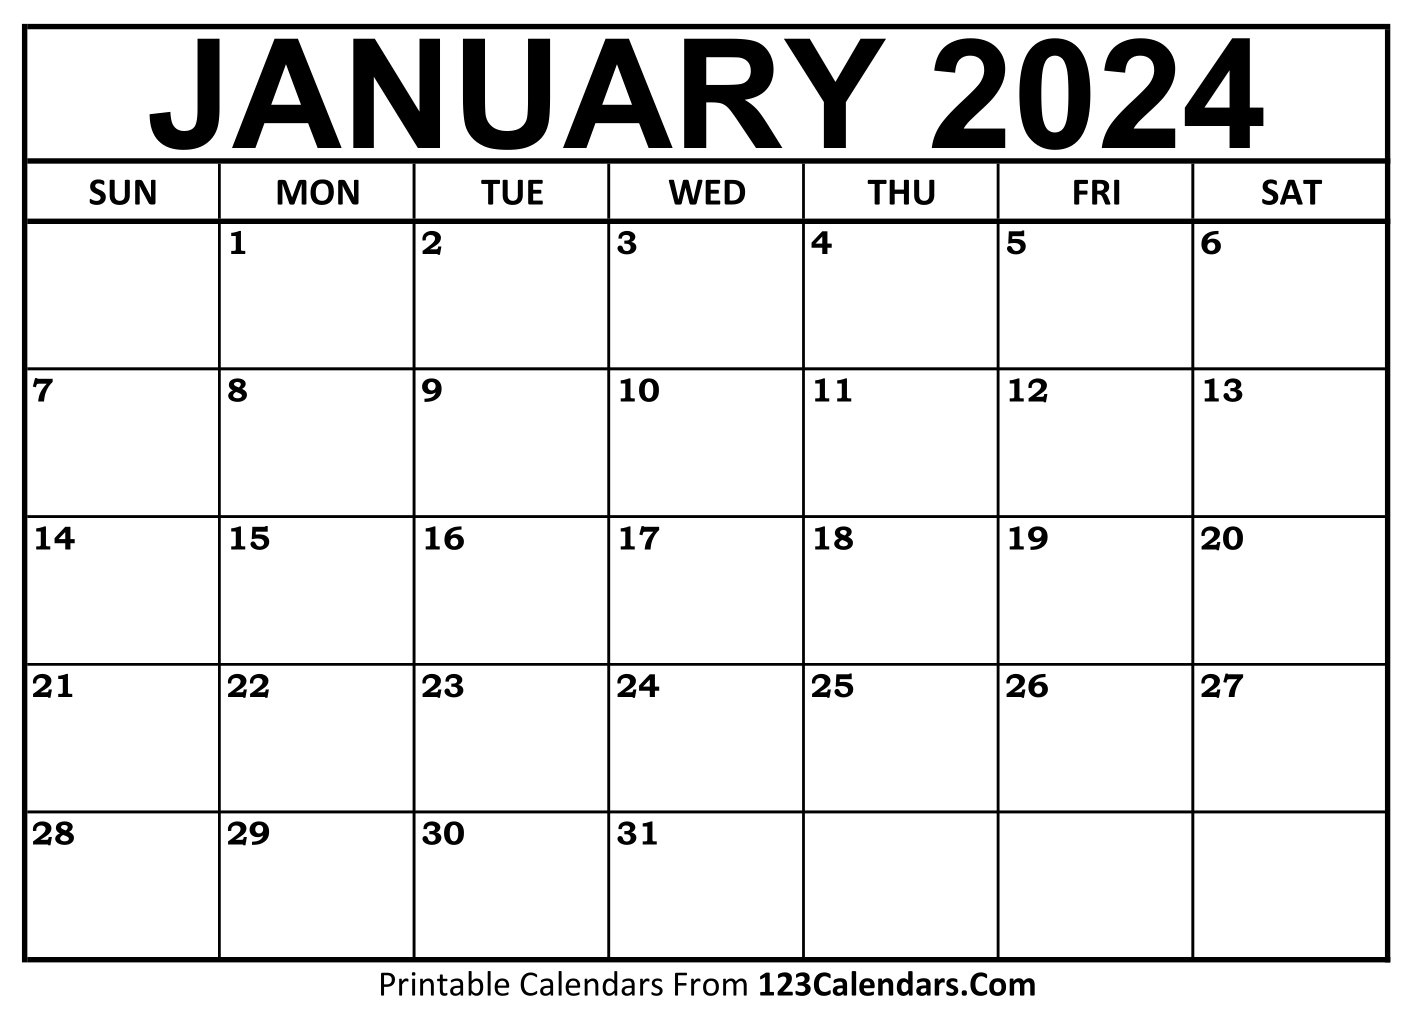 Printable January 2024 Calendar Templates - 123Calendars | Blank Calendar Printable 2024